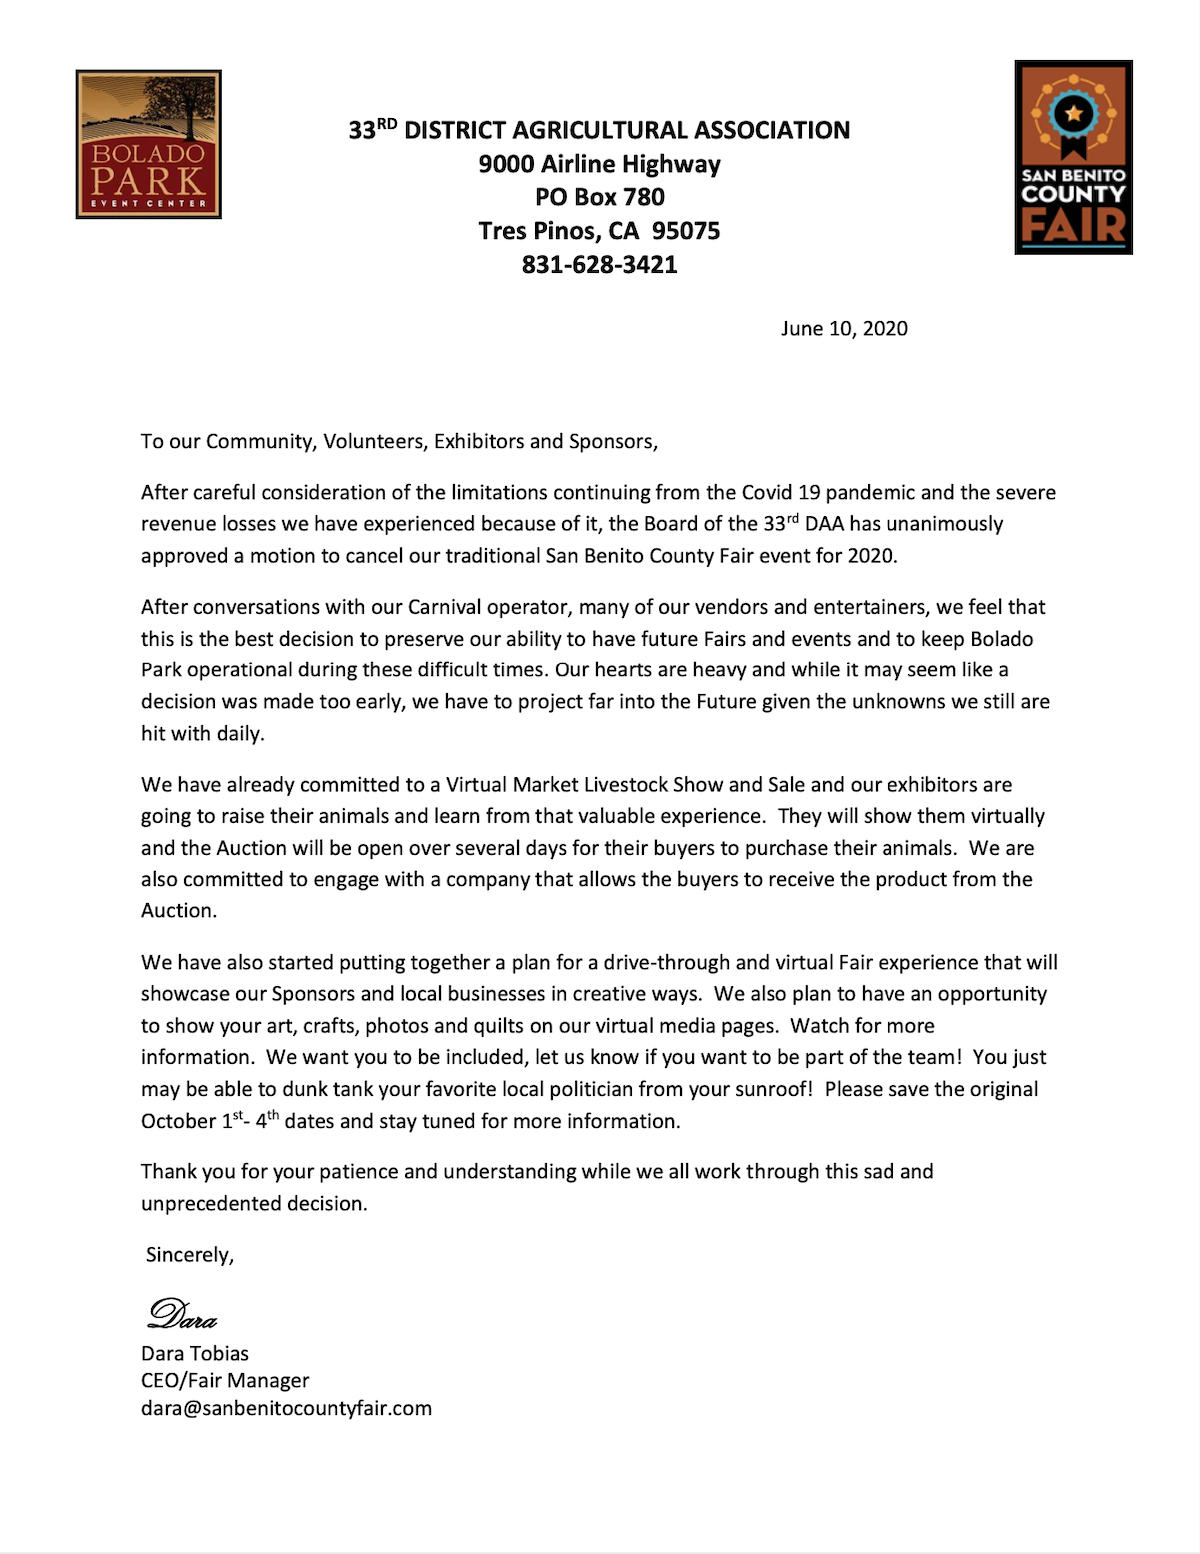 SBC Fair Cancellation Letter 6-12-2020